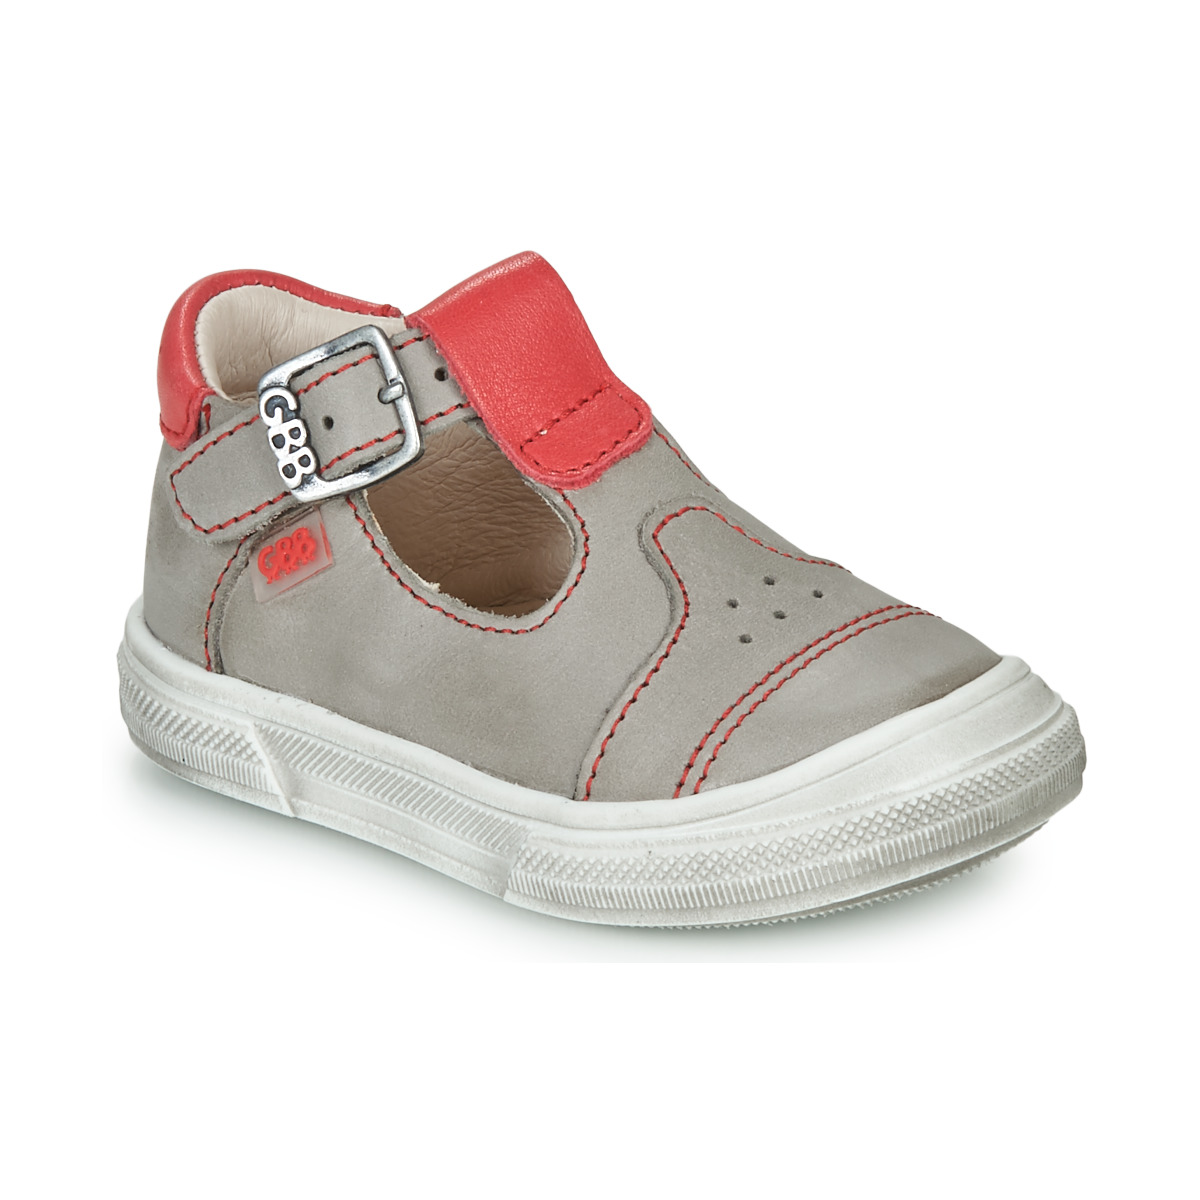 Shoes Boy Sandals GBB DENYS Grey